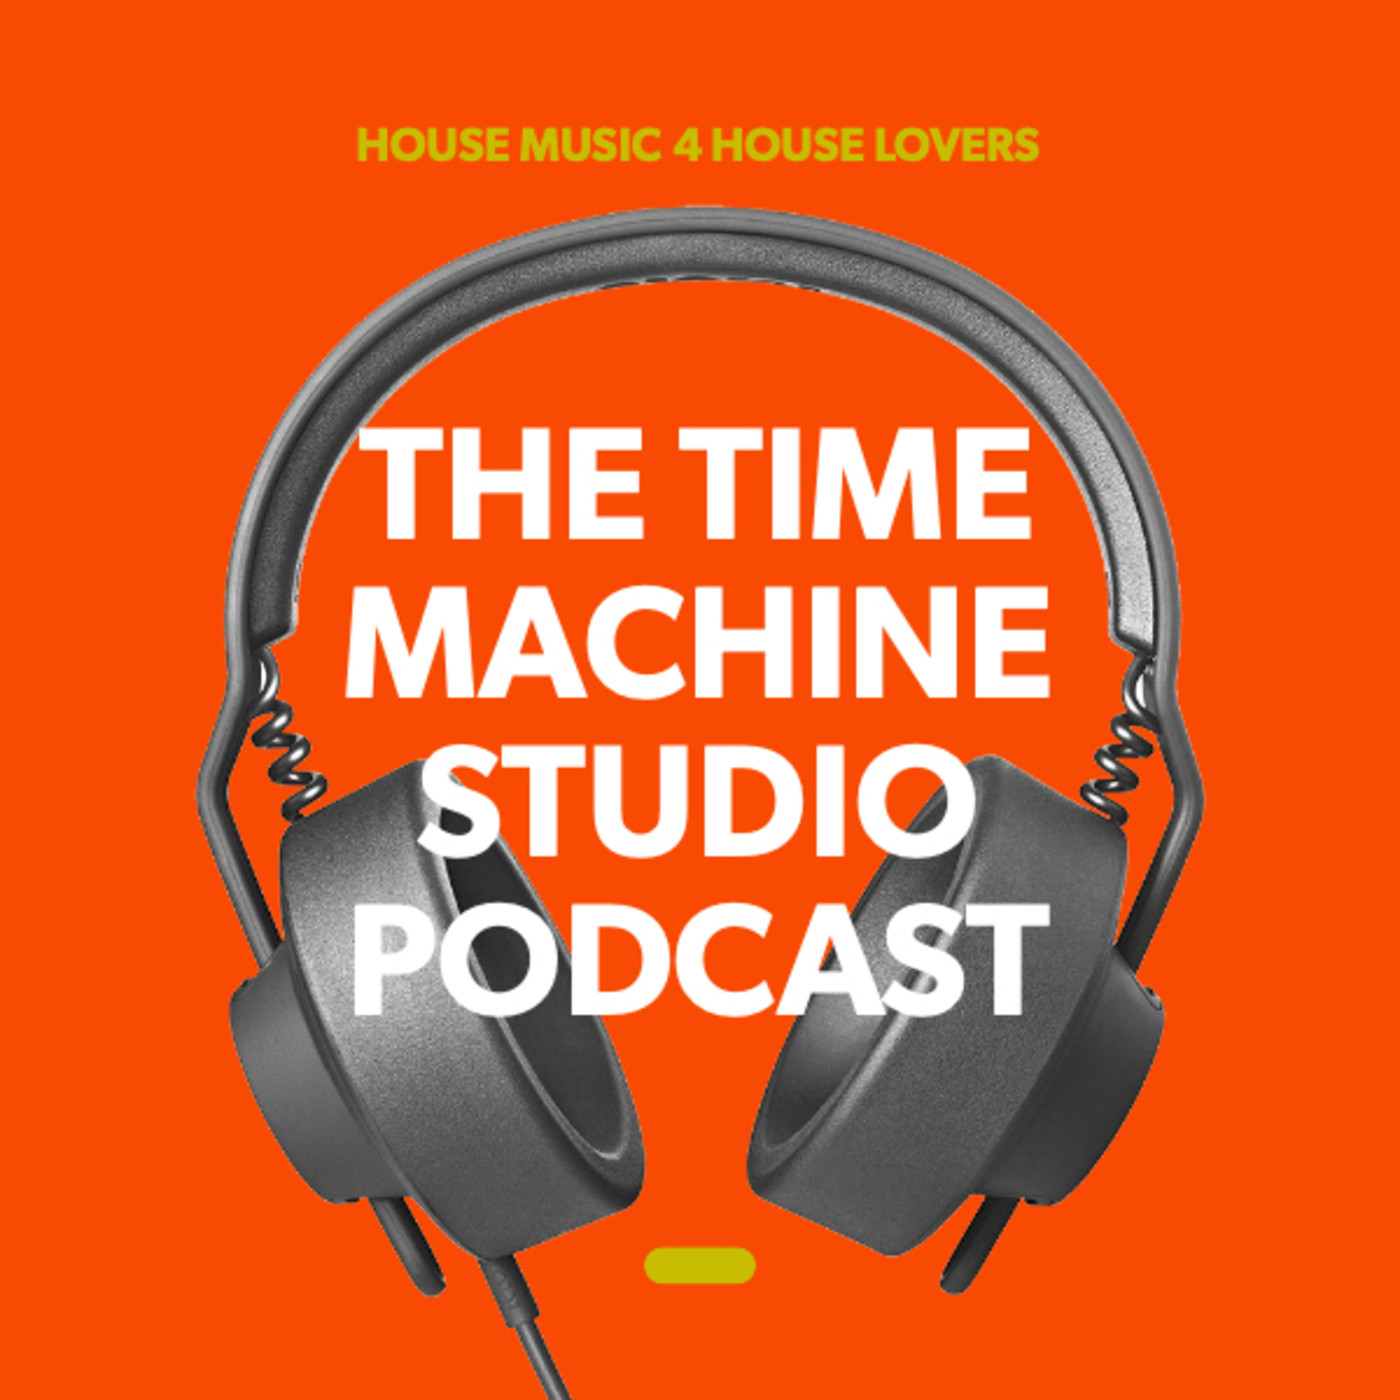 The Time Machine Studio